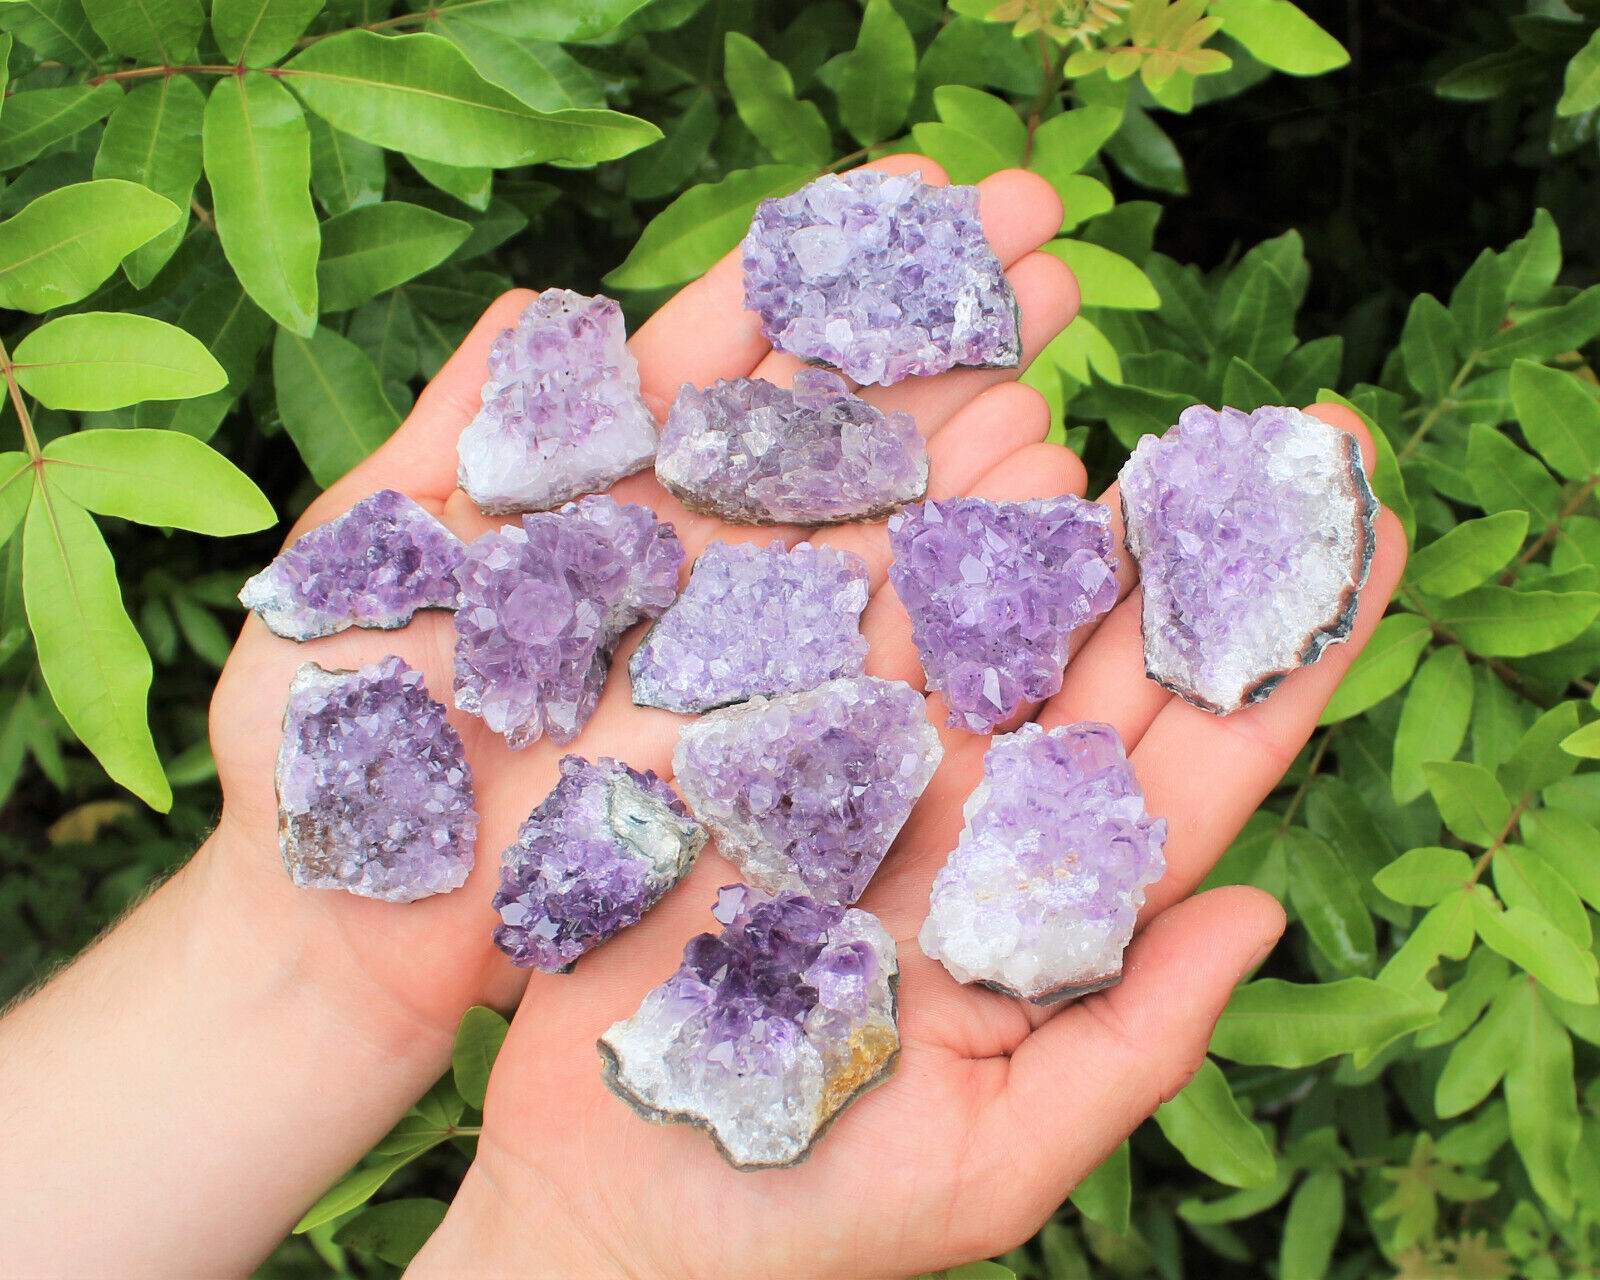 Bulk 1/2 lb Lot Natural Amethyst Crystal Clusters Geodes Gemstone (2 - 3 Pieces)